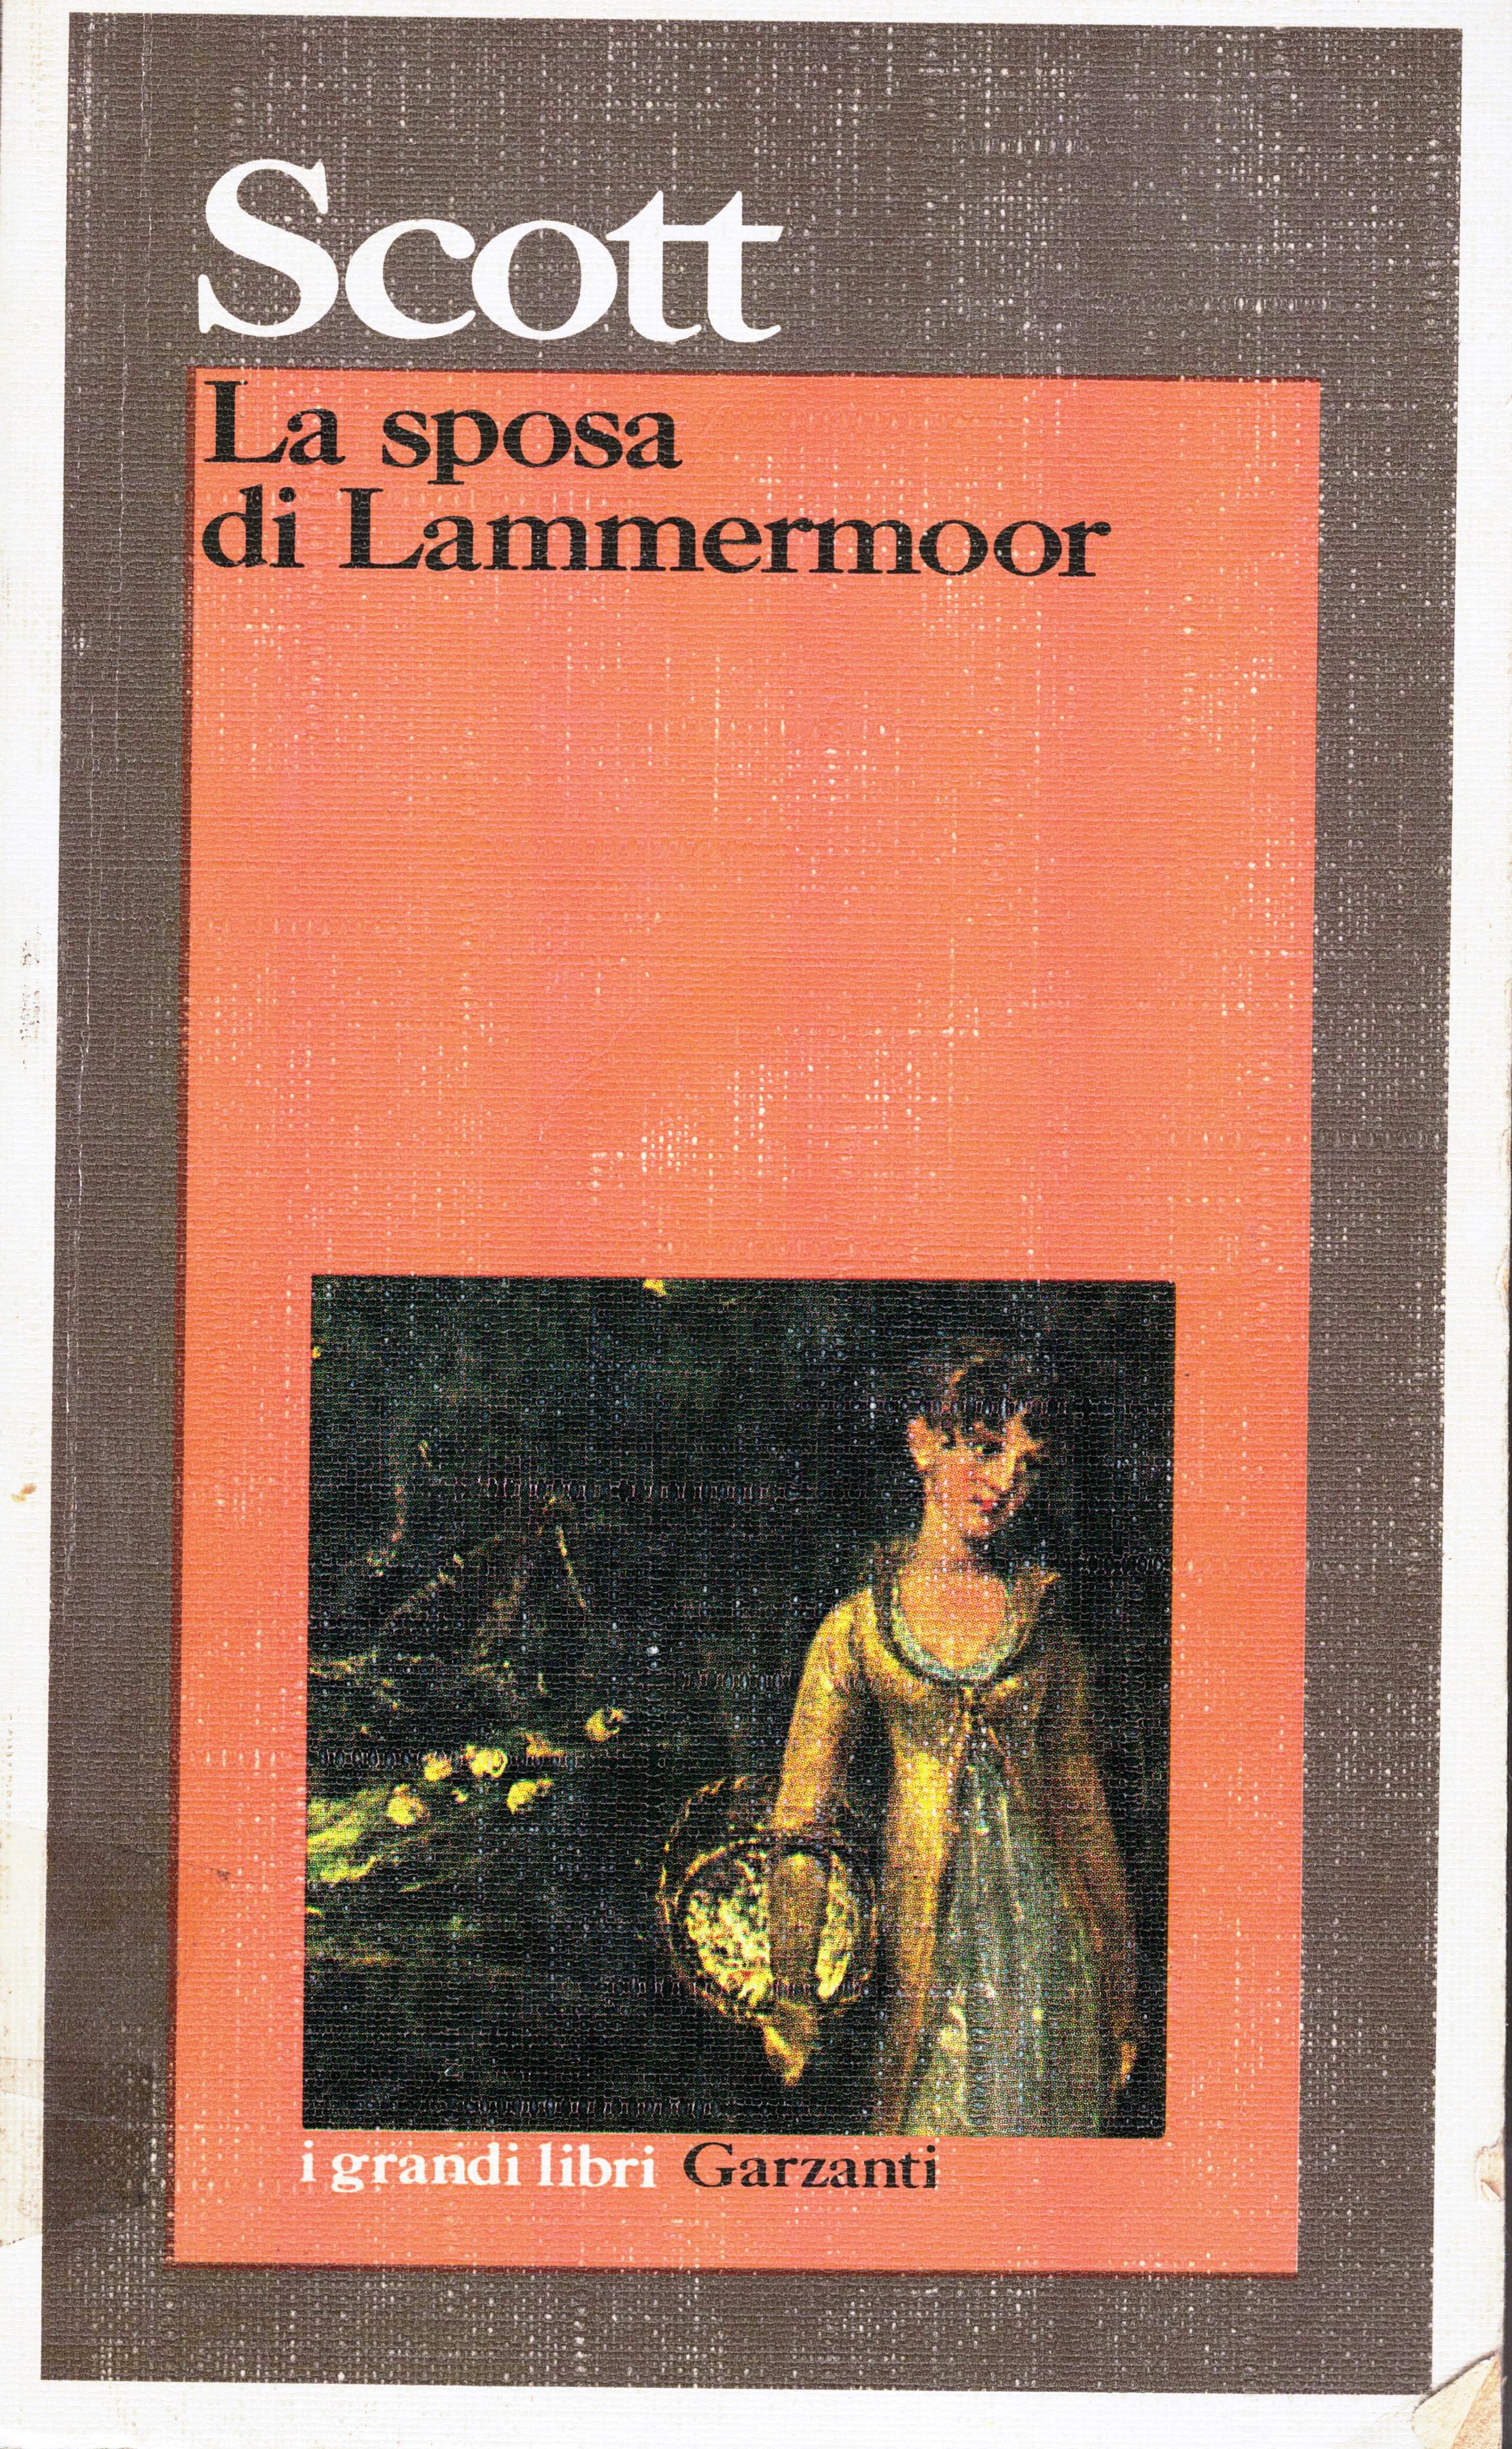 Sir Walter Scott: "La sposa di Lammermoor"